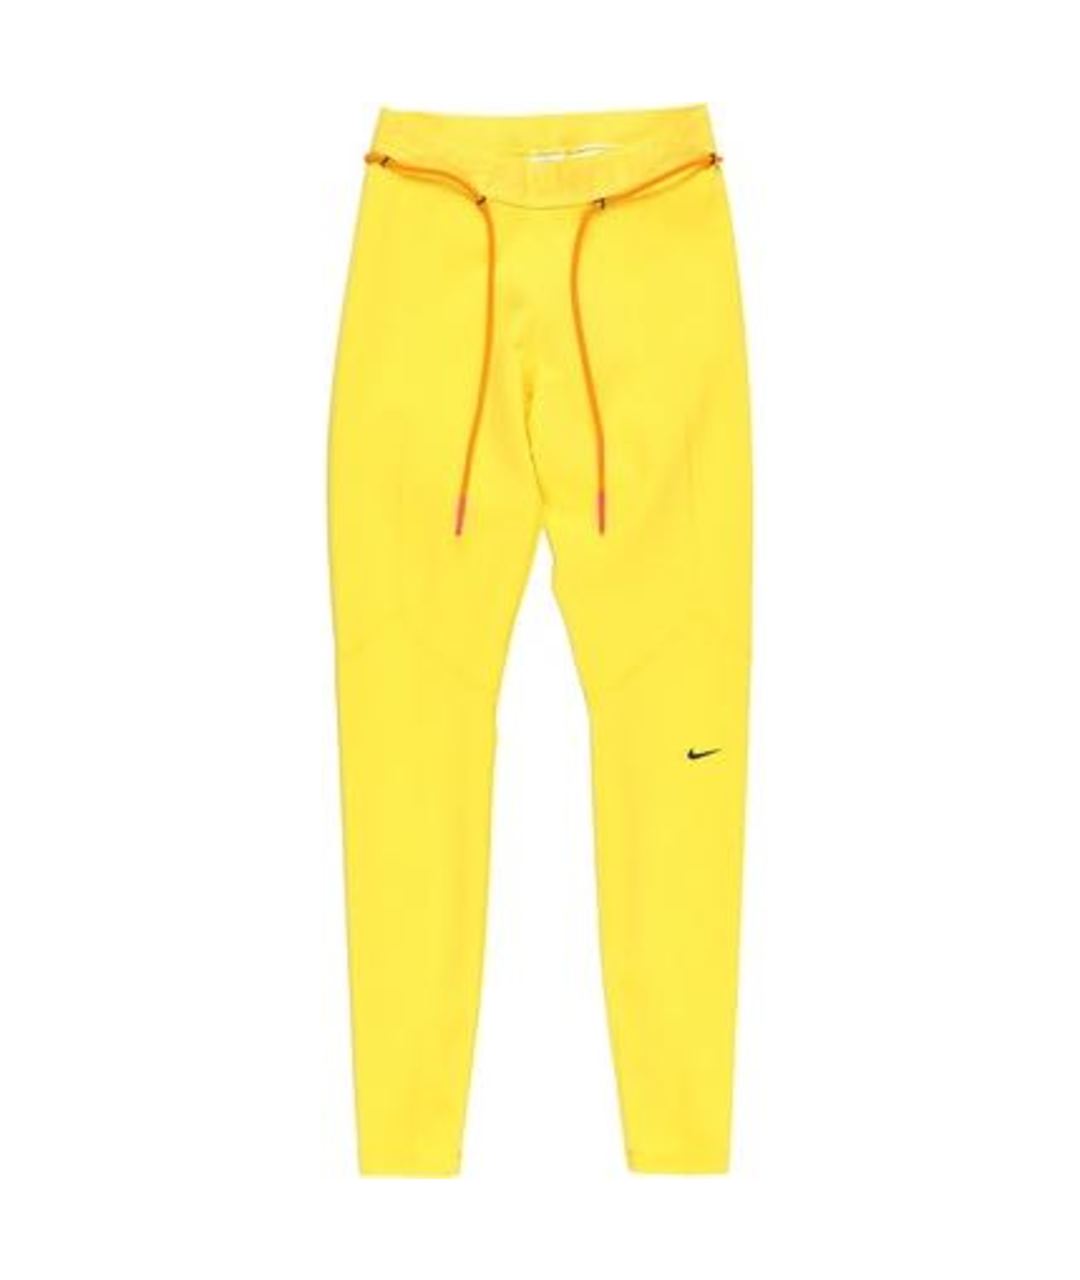 NIKE X OFF-WHITE Желтый спортивные костюмы, фото 1